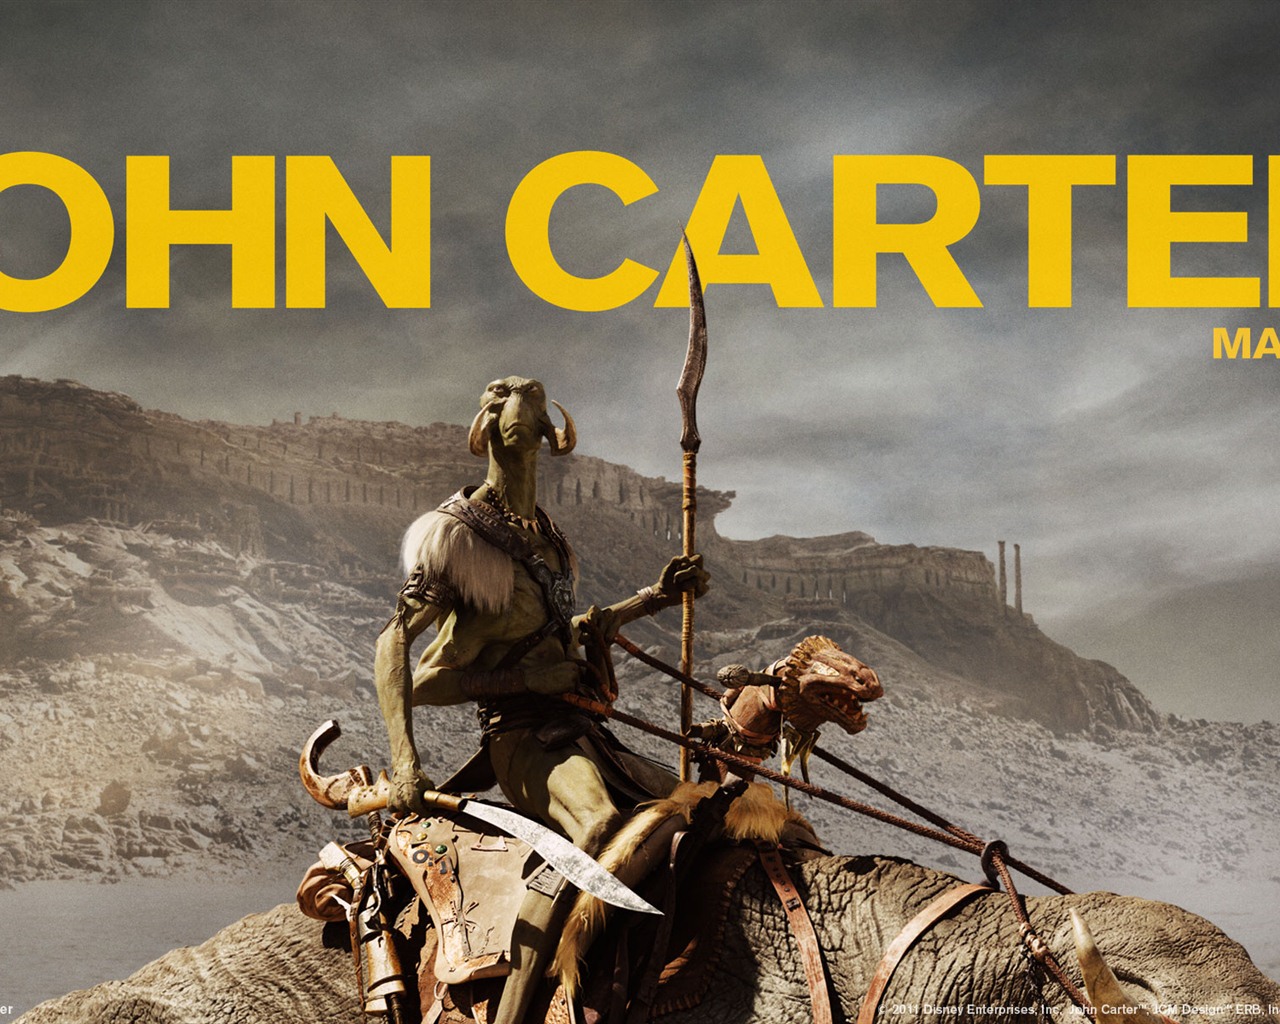 2012 fonds d'écran HD John Carter #6 - 1280x1024